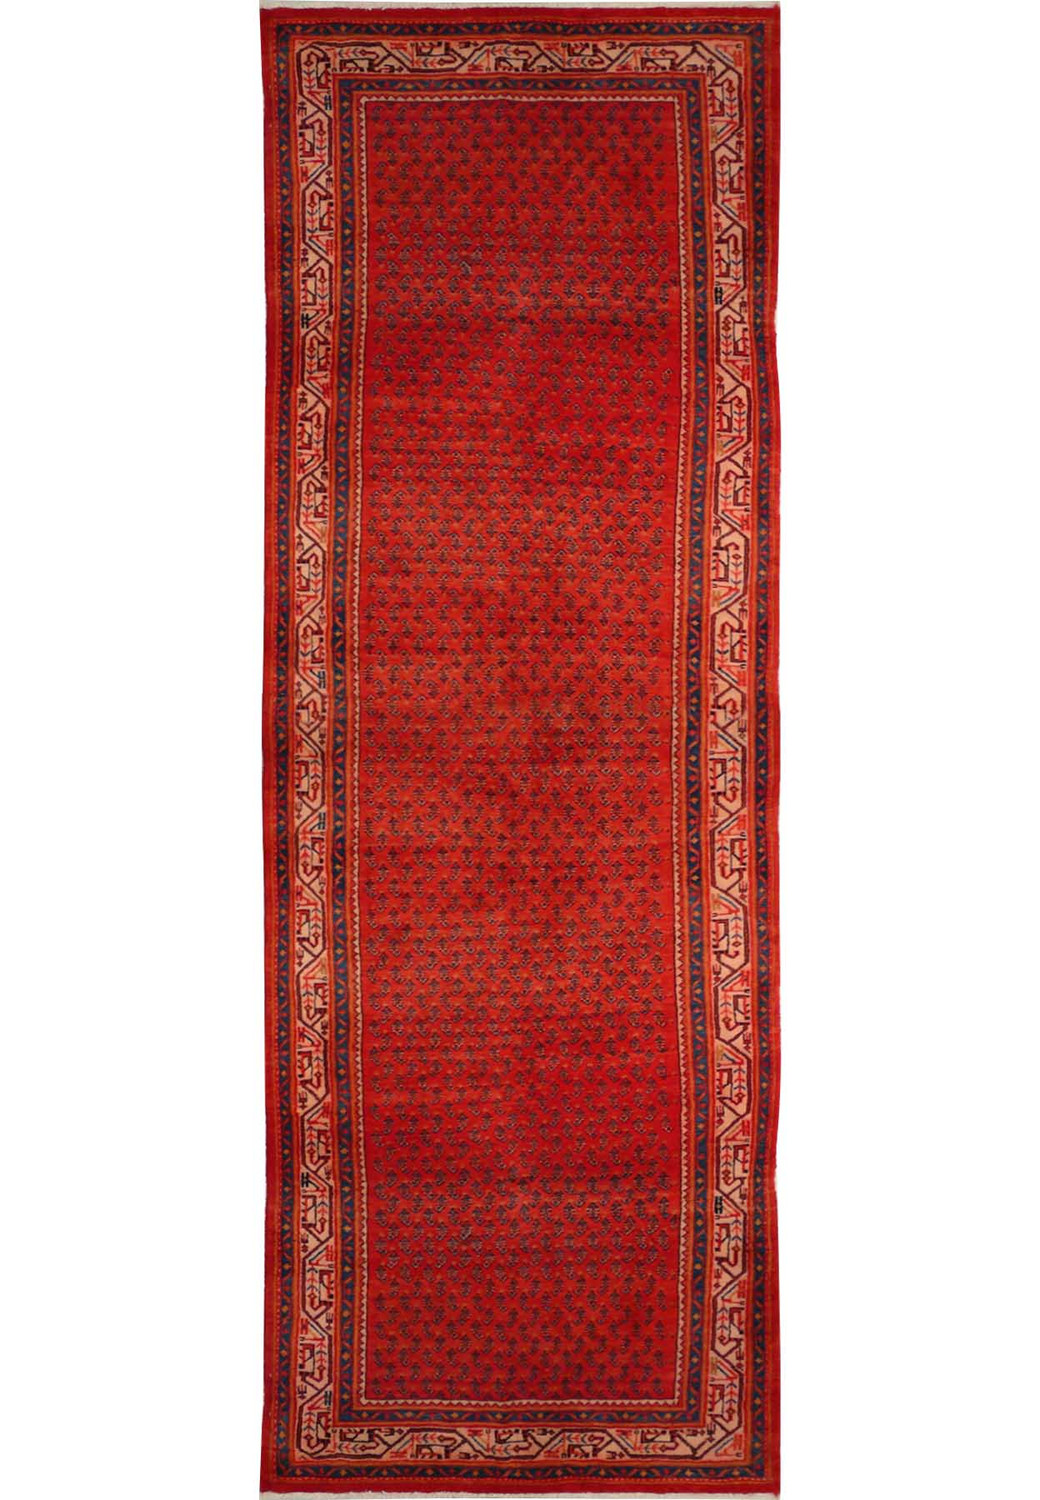 4 x 14 Unusual Size Persian Sarough Runner Rug